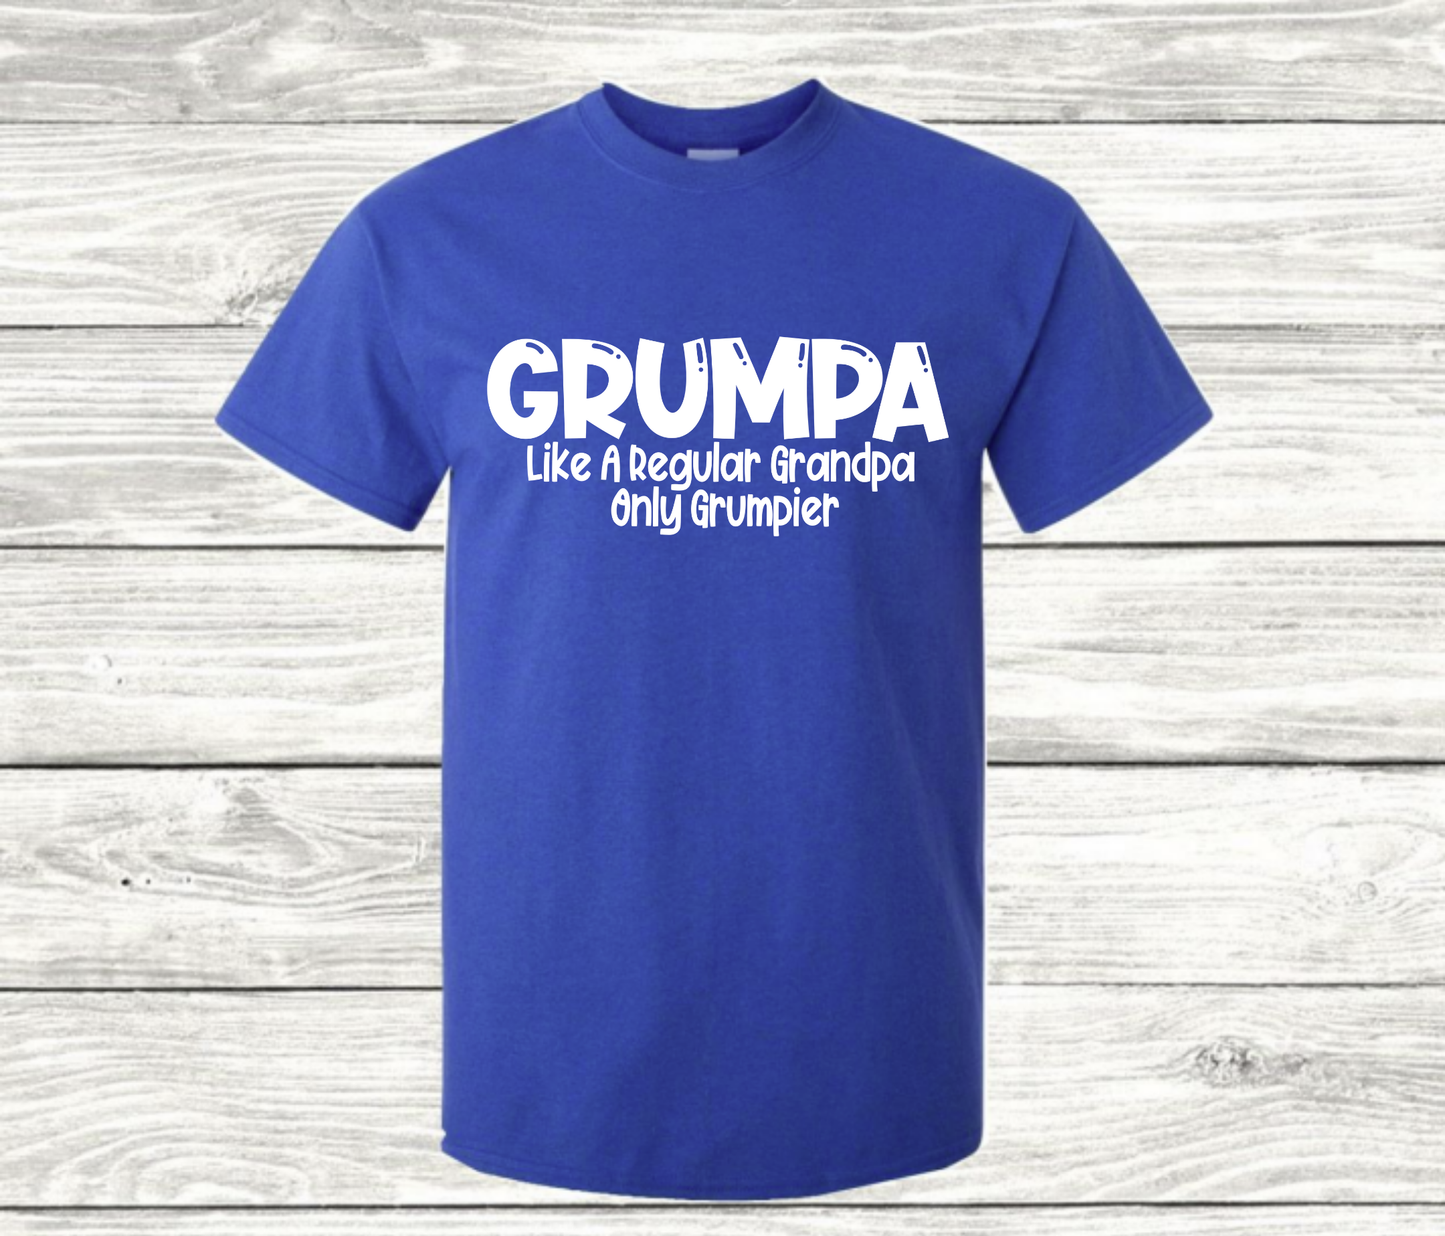 Grumpa - Like a Regular Grampa only Grumpier - Funny T-Shirt - Mister Snarky's